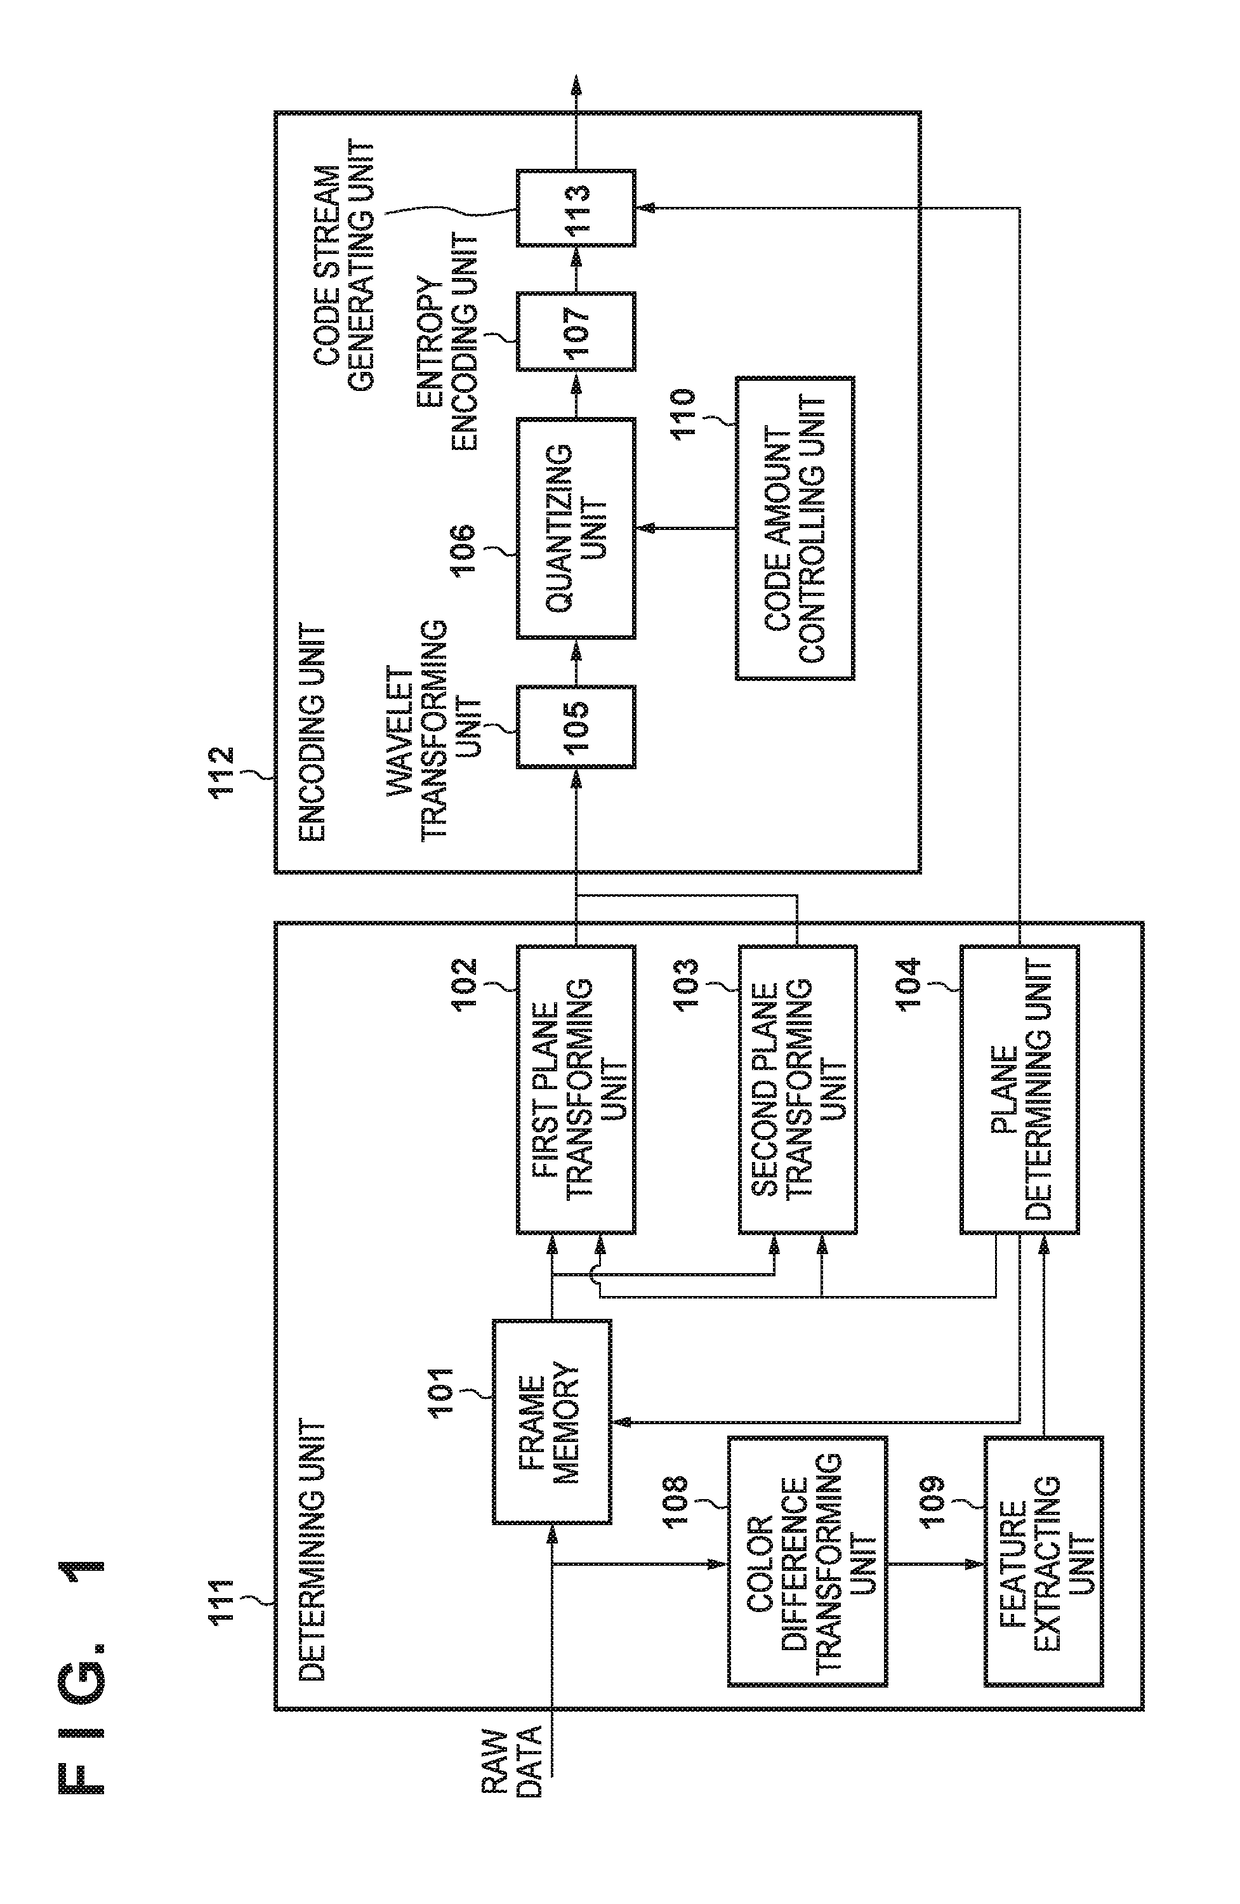 Image encoding apparatus, control method thereof, and storage medium